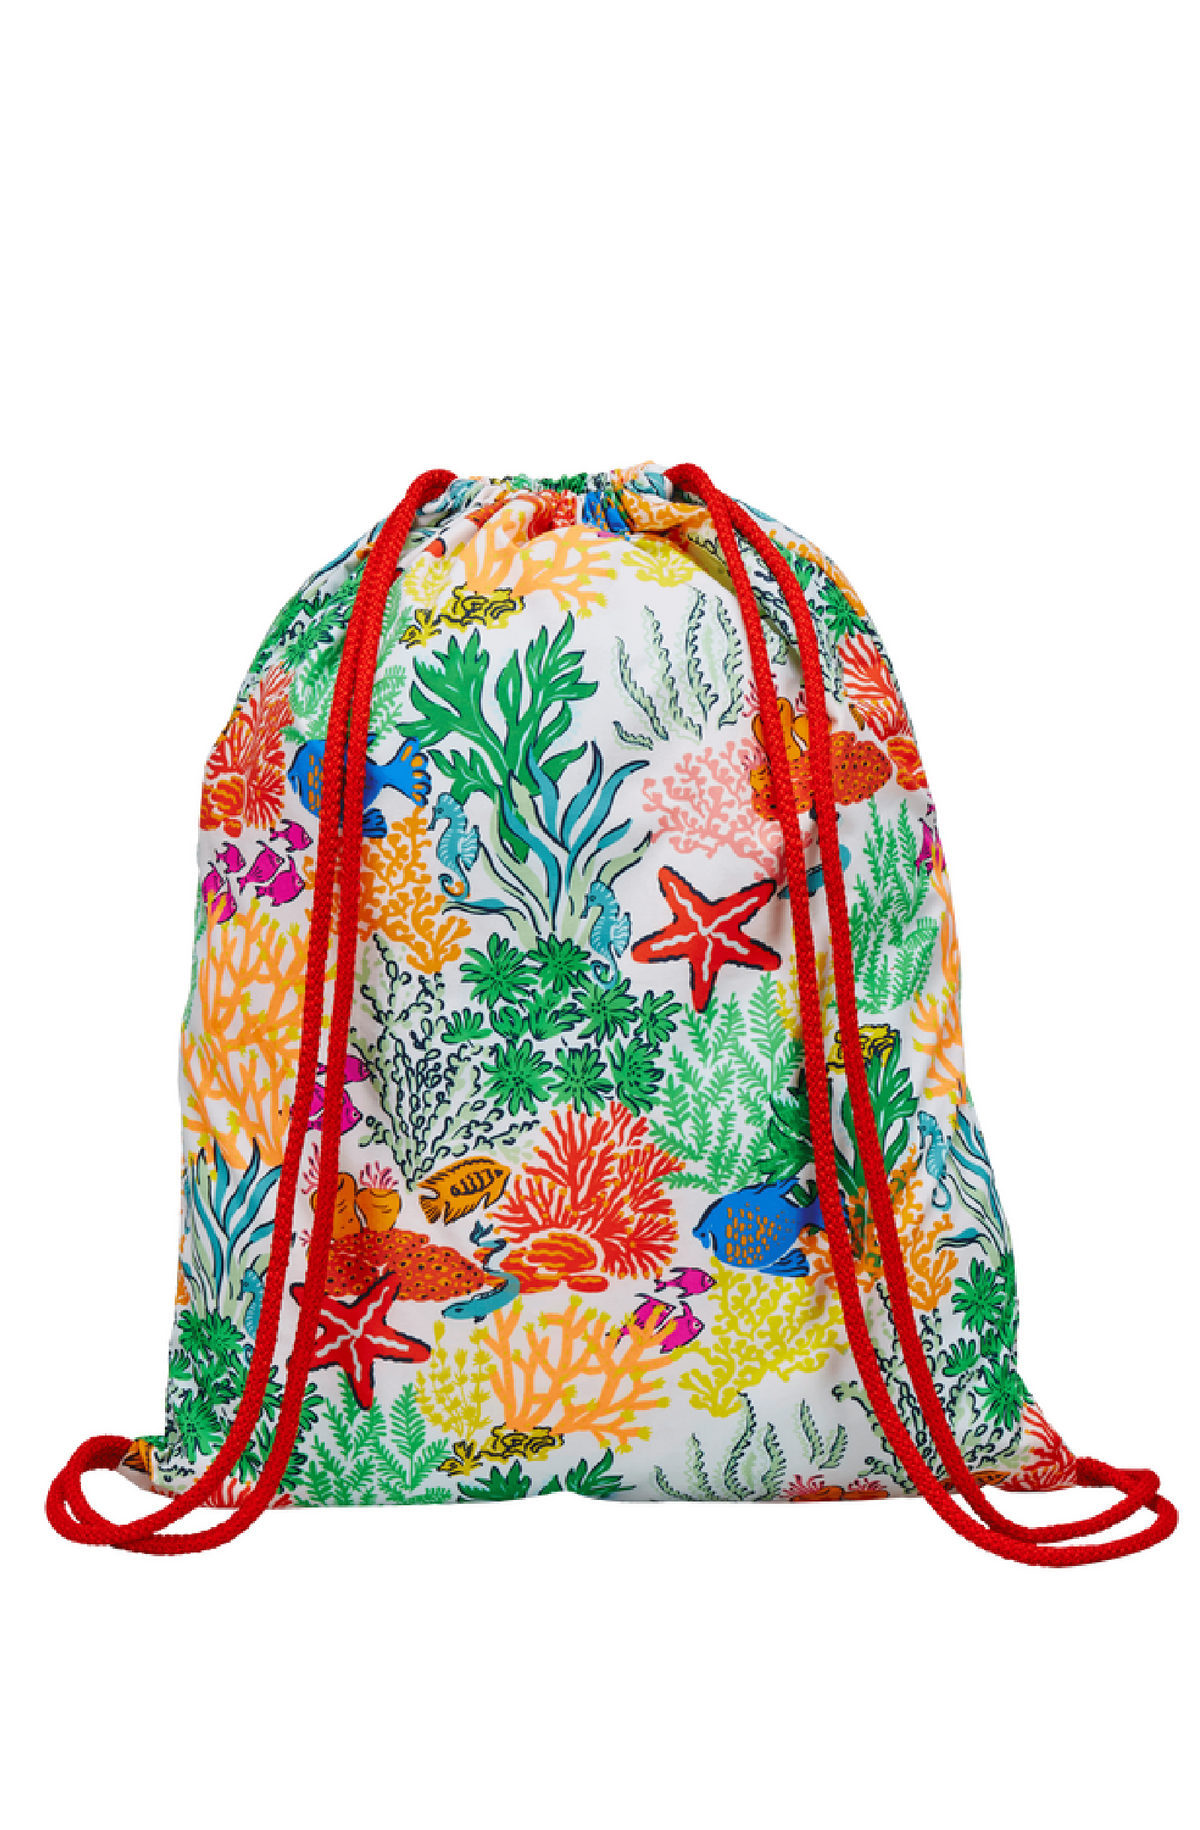 VILEBREQUIN Kids Backpack Fonds Marins Multicolores | HAMAC Beach Boutique